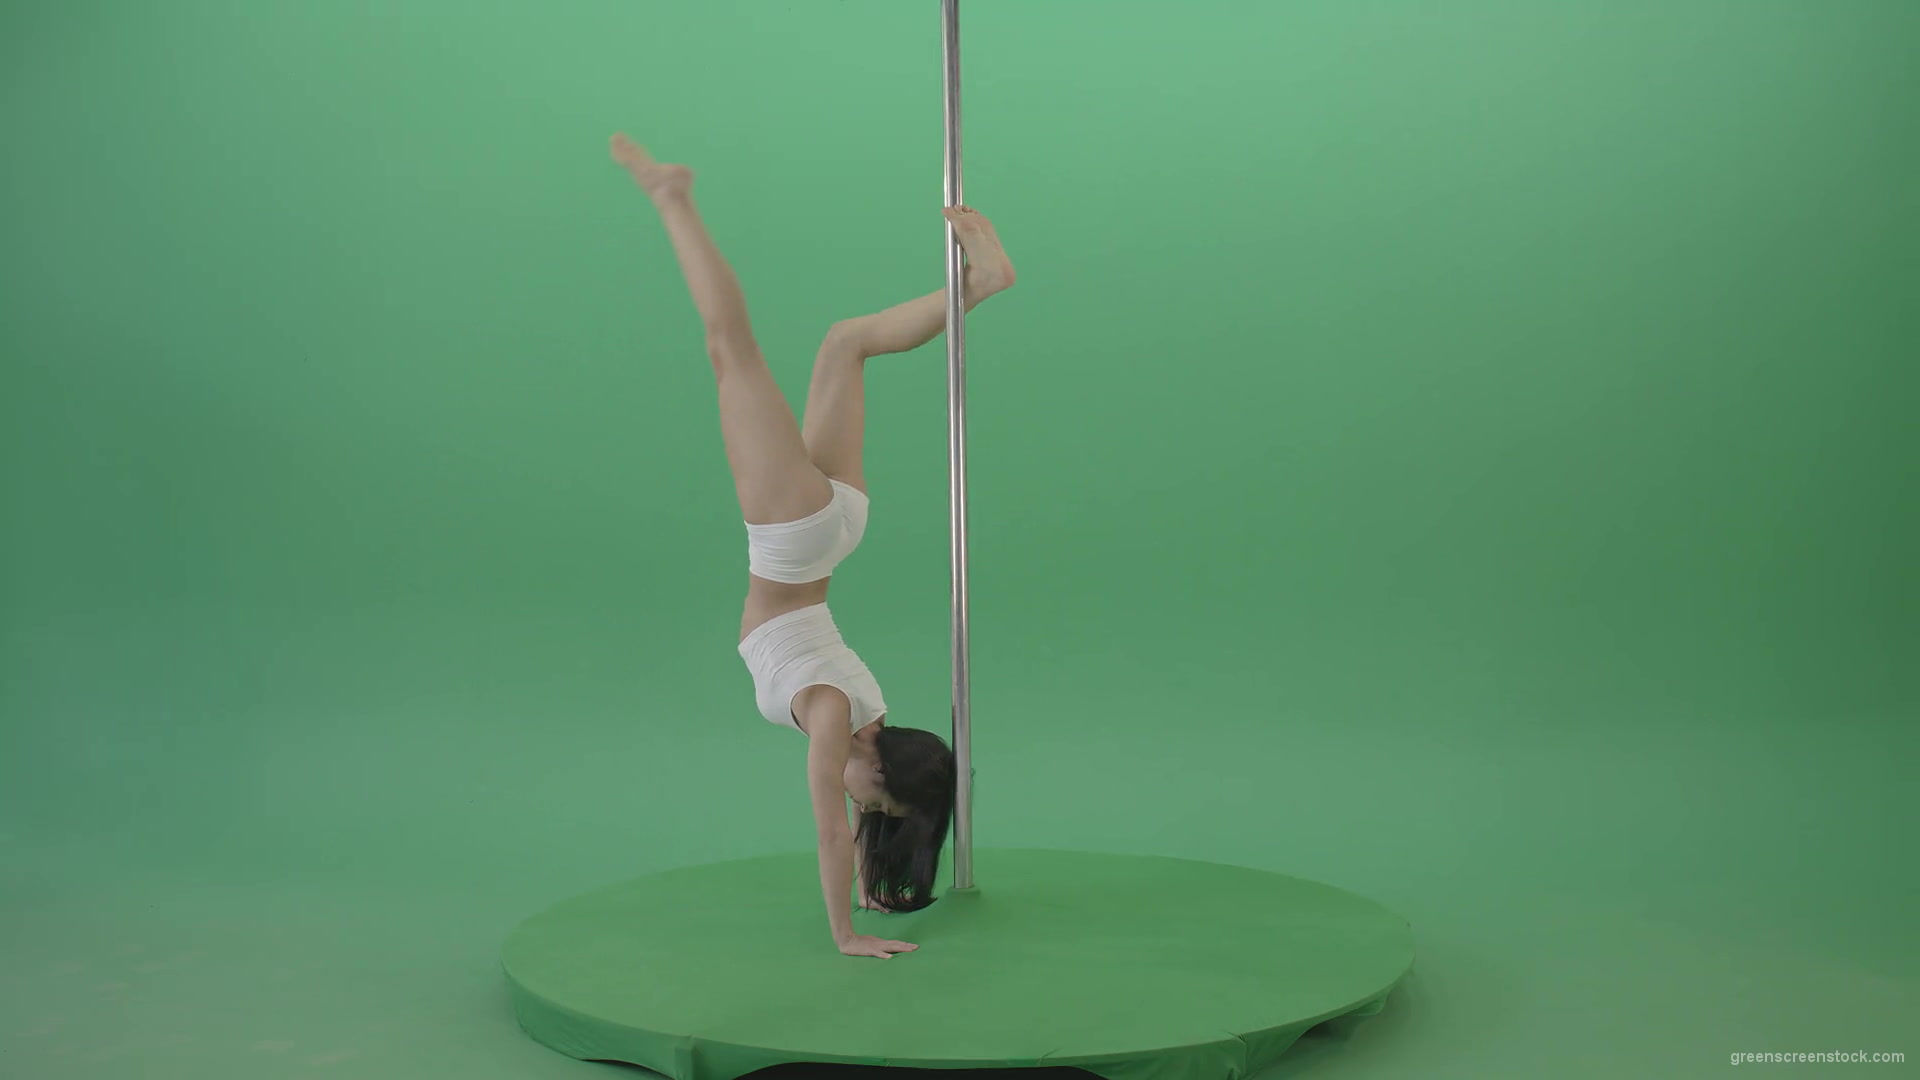 Fit-Girl-waving-legs-dancing-pole-dance-on-green-screen-4K-Video-Footage-1920_004 Green Screen Stock